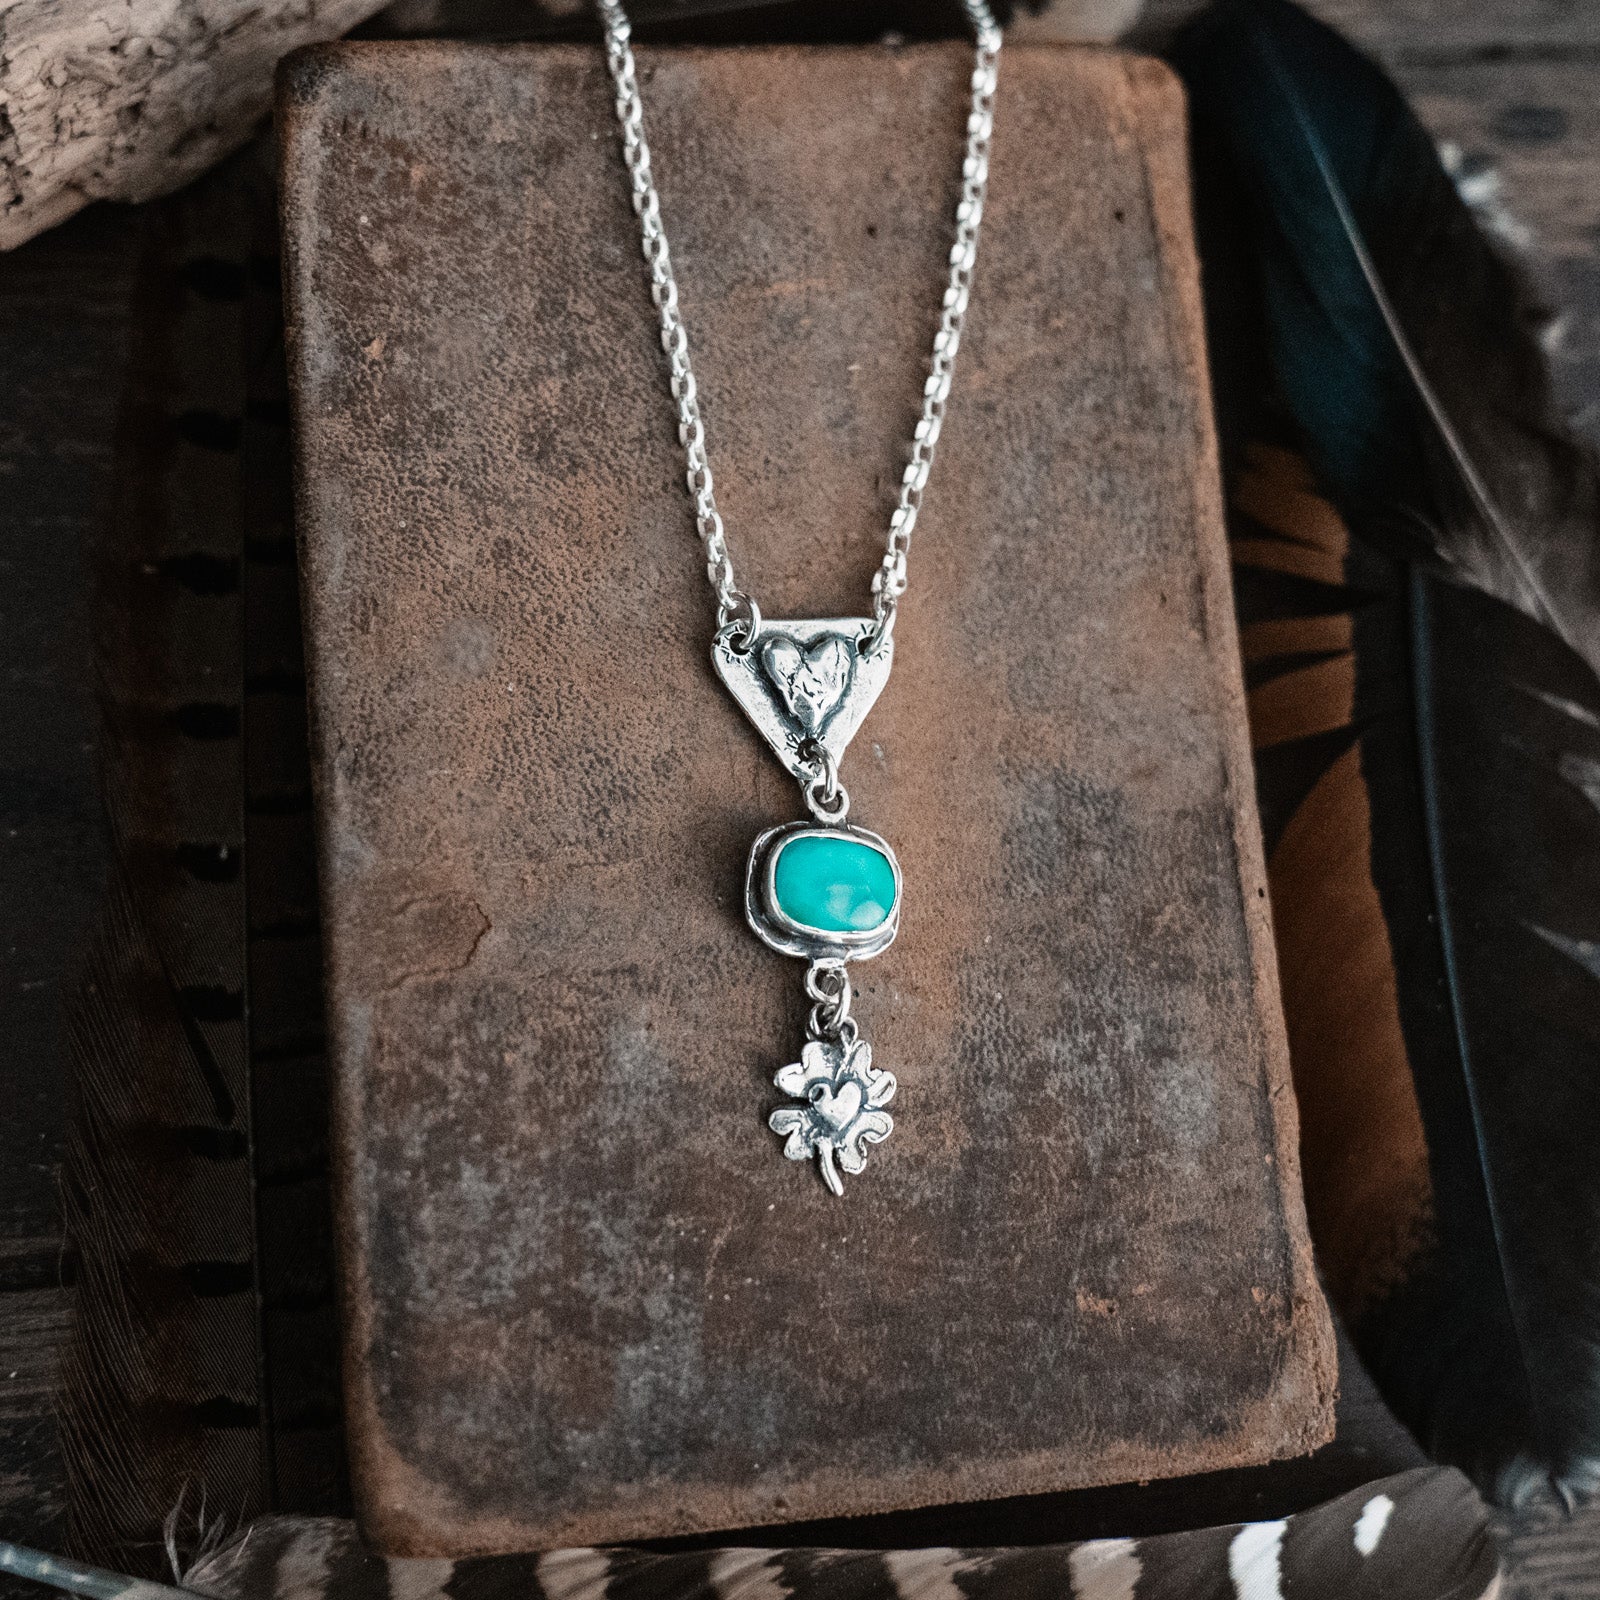 Island Cowgirl Jewelry - Western Turquoise Jewelry for Women